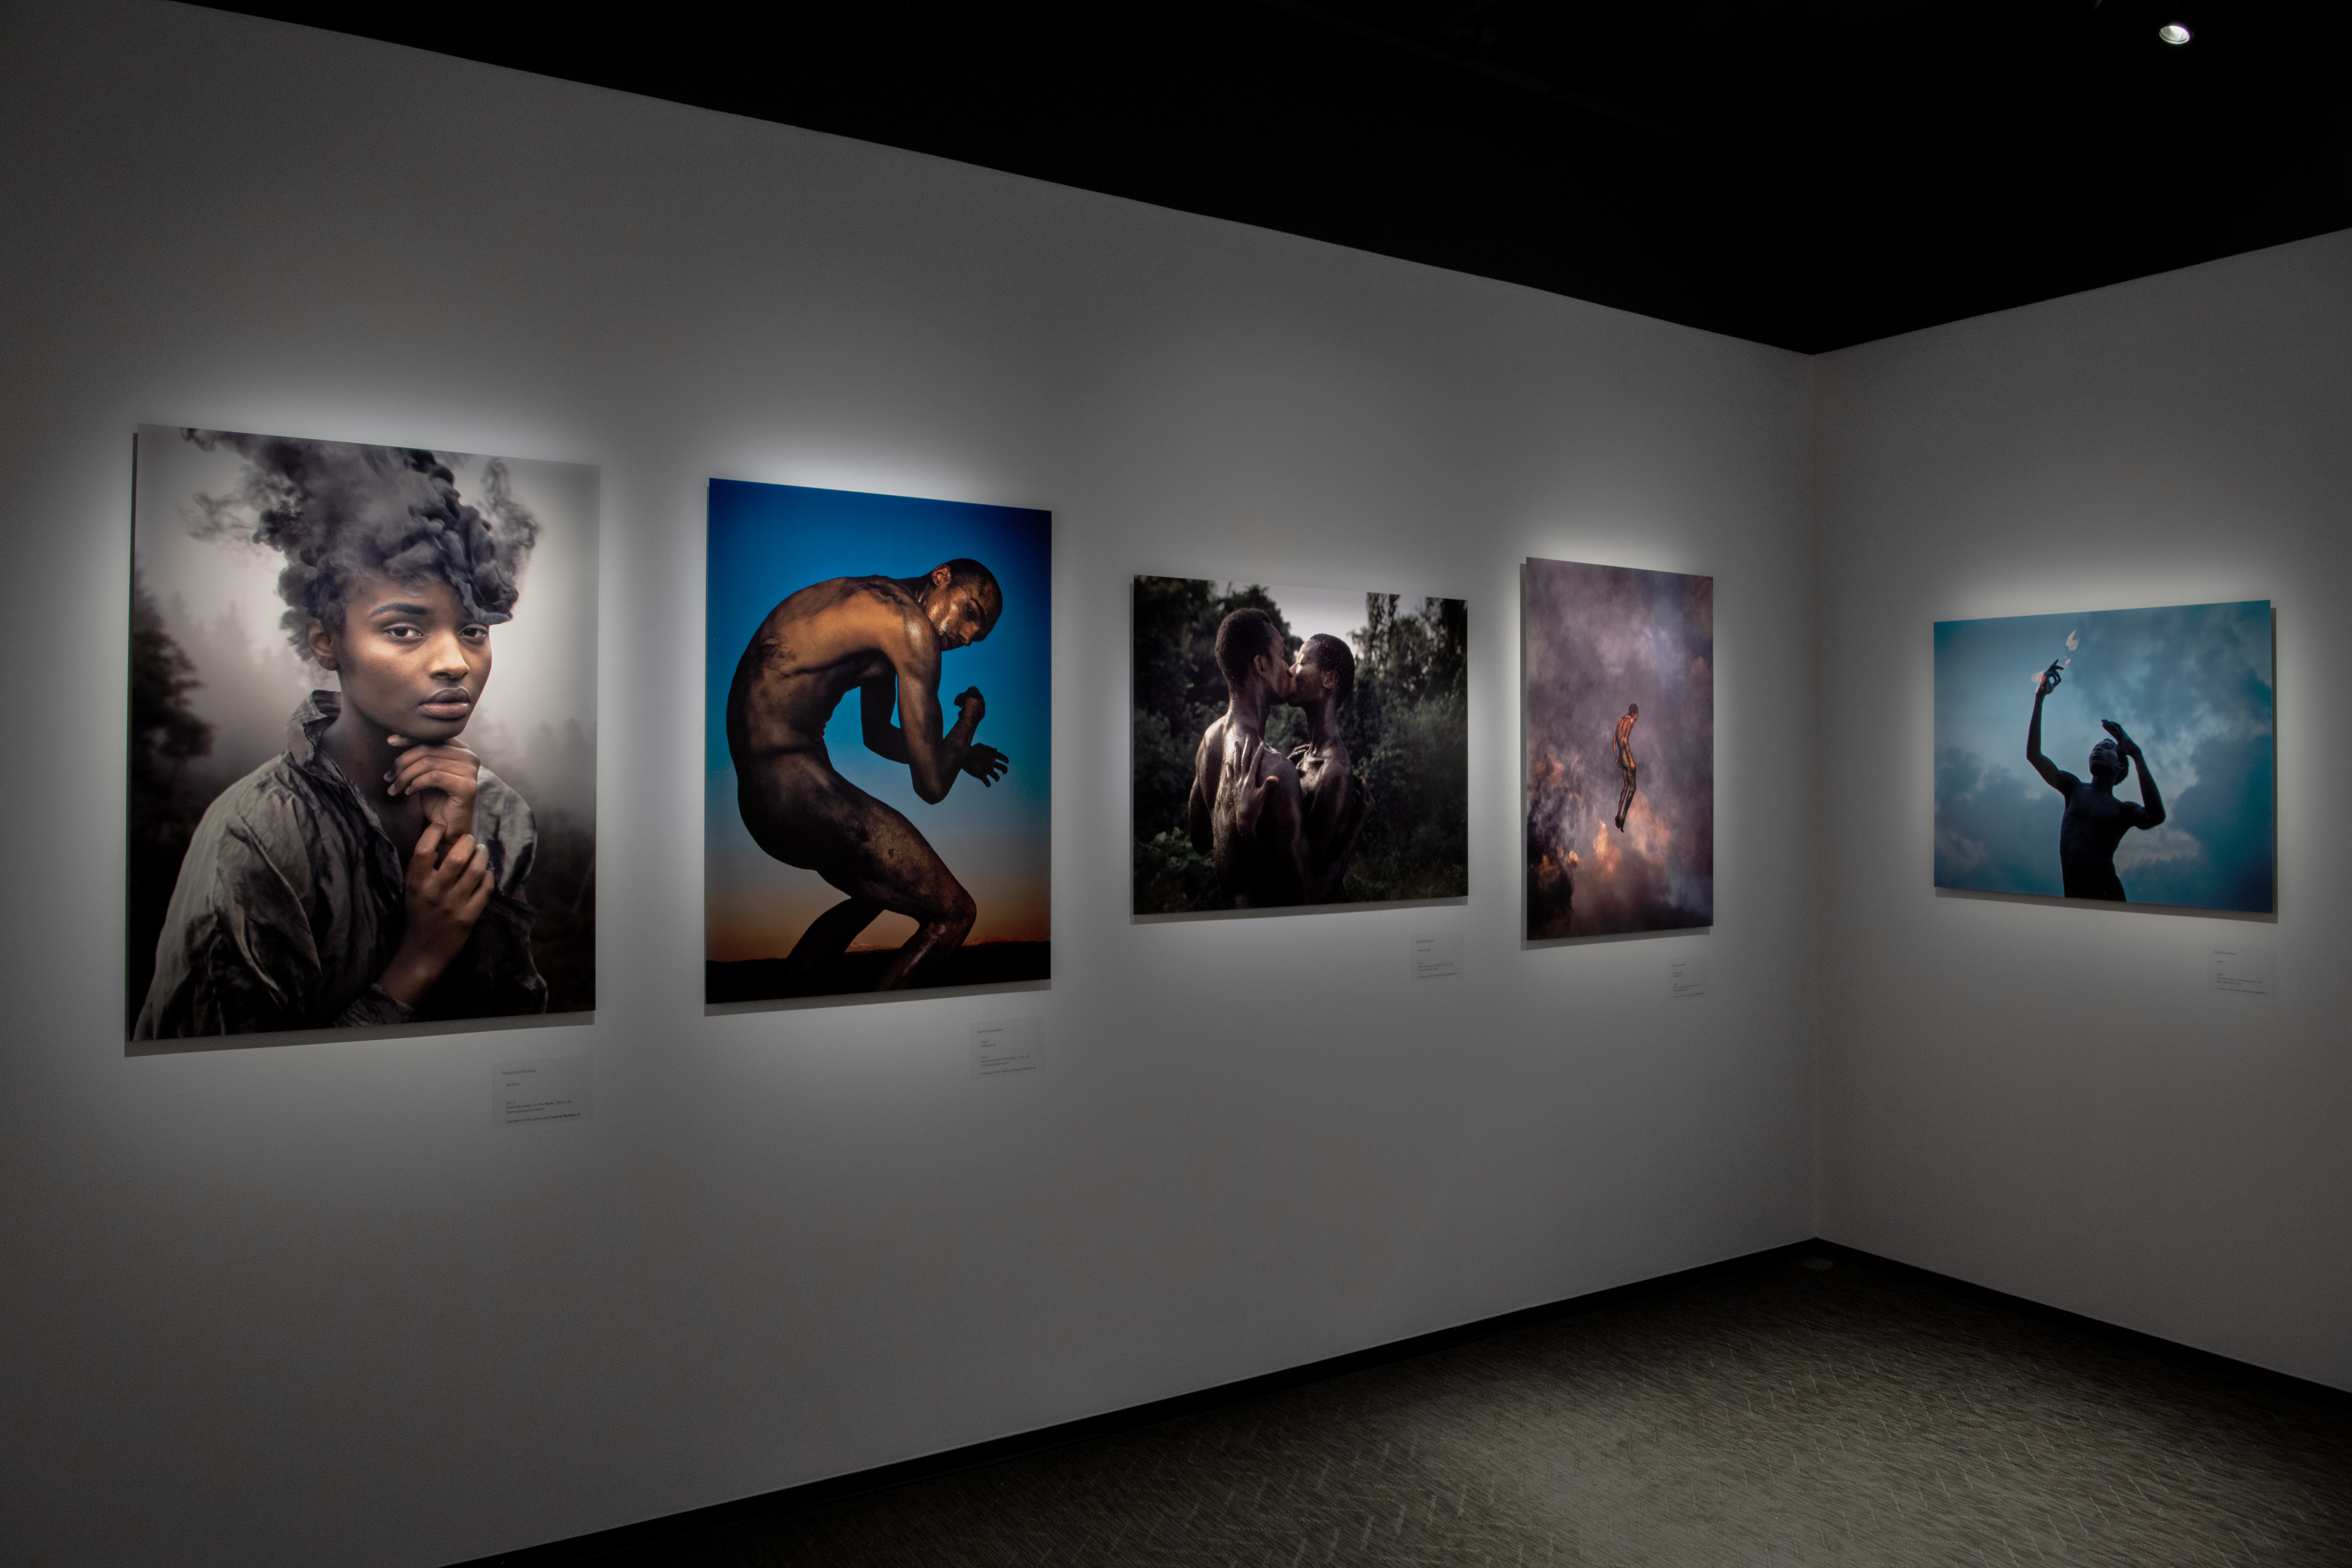 Prix Pictet ‘Fire’ Exhibition at Fotografiska